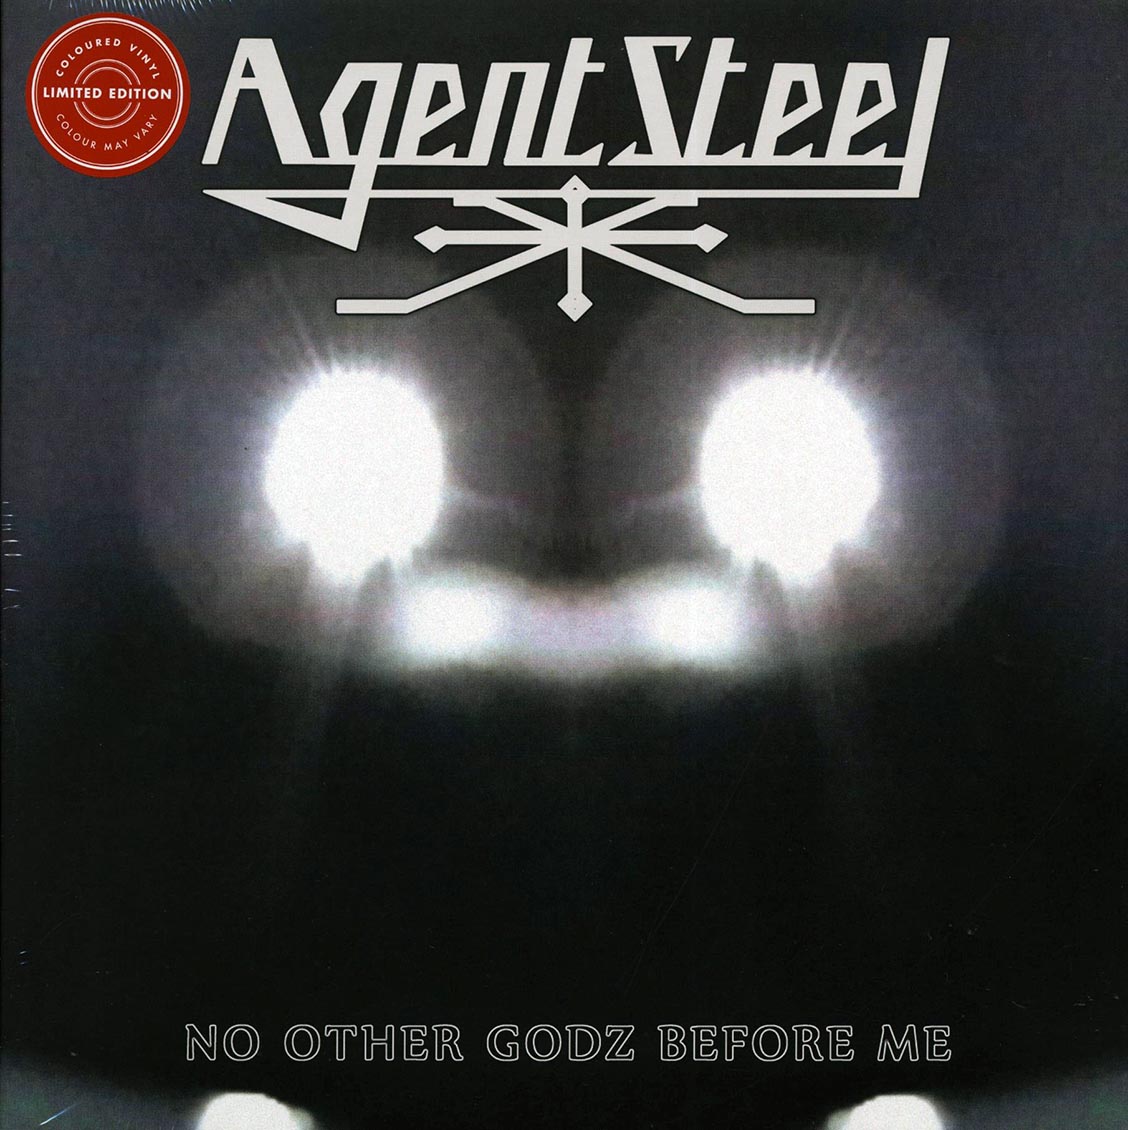 Agent Steel - No Other Godz Before Me (ltd. ed.) (2xLP) (splatter vinyl) - Vinyl LP